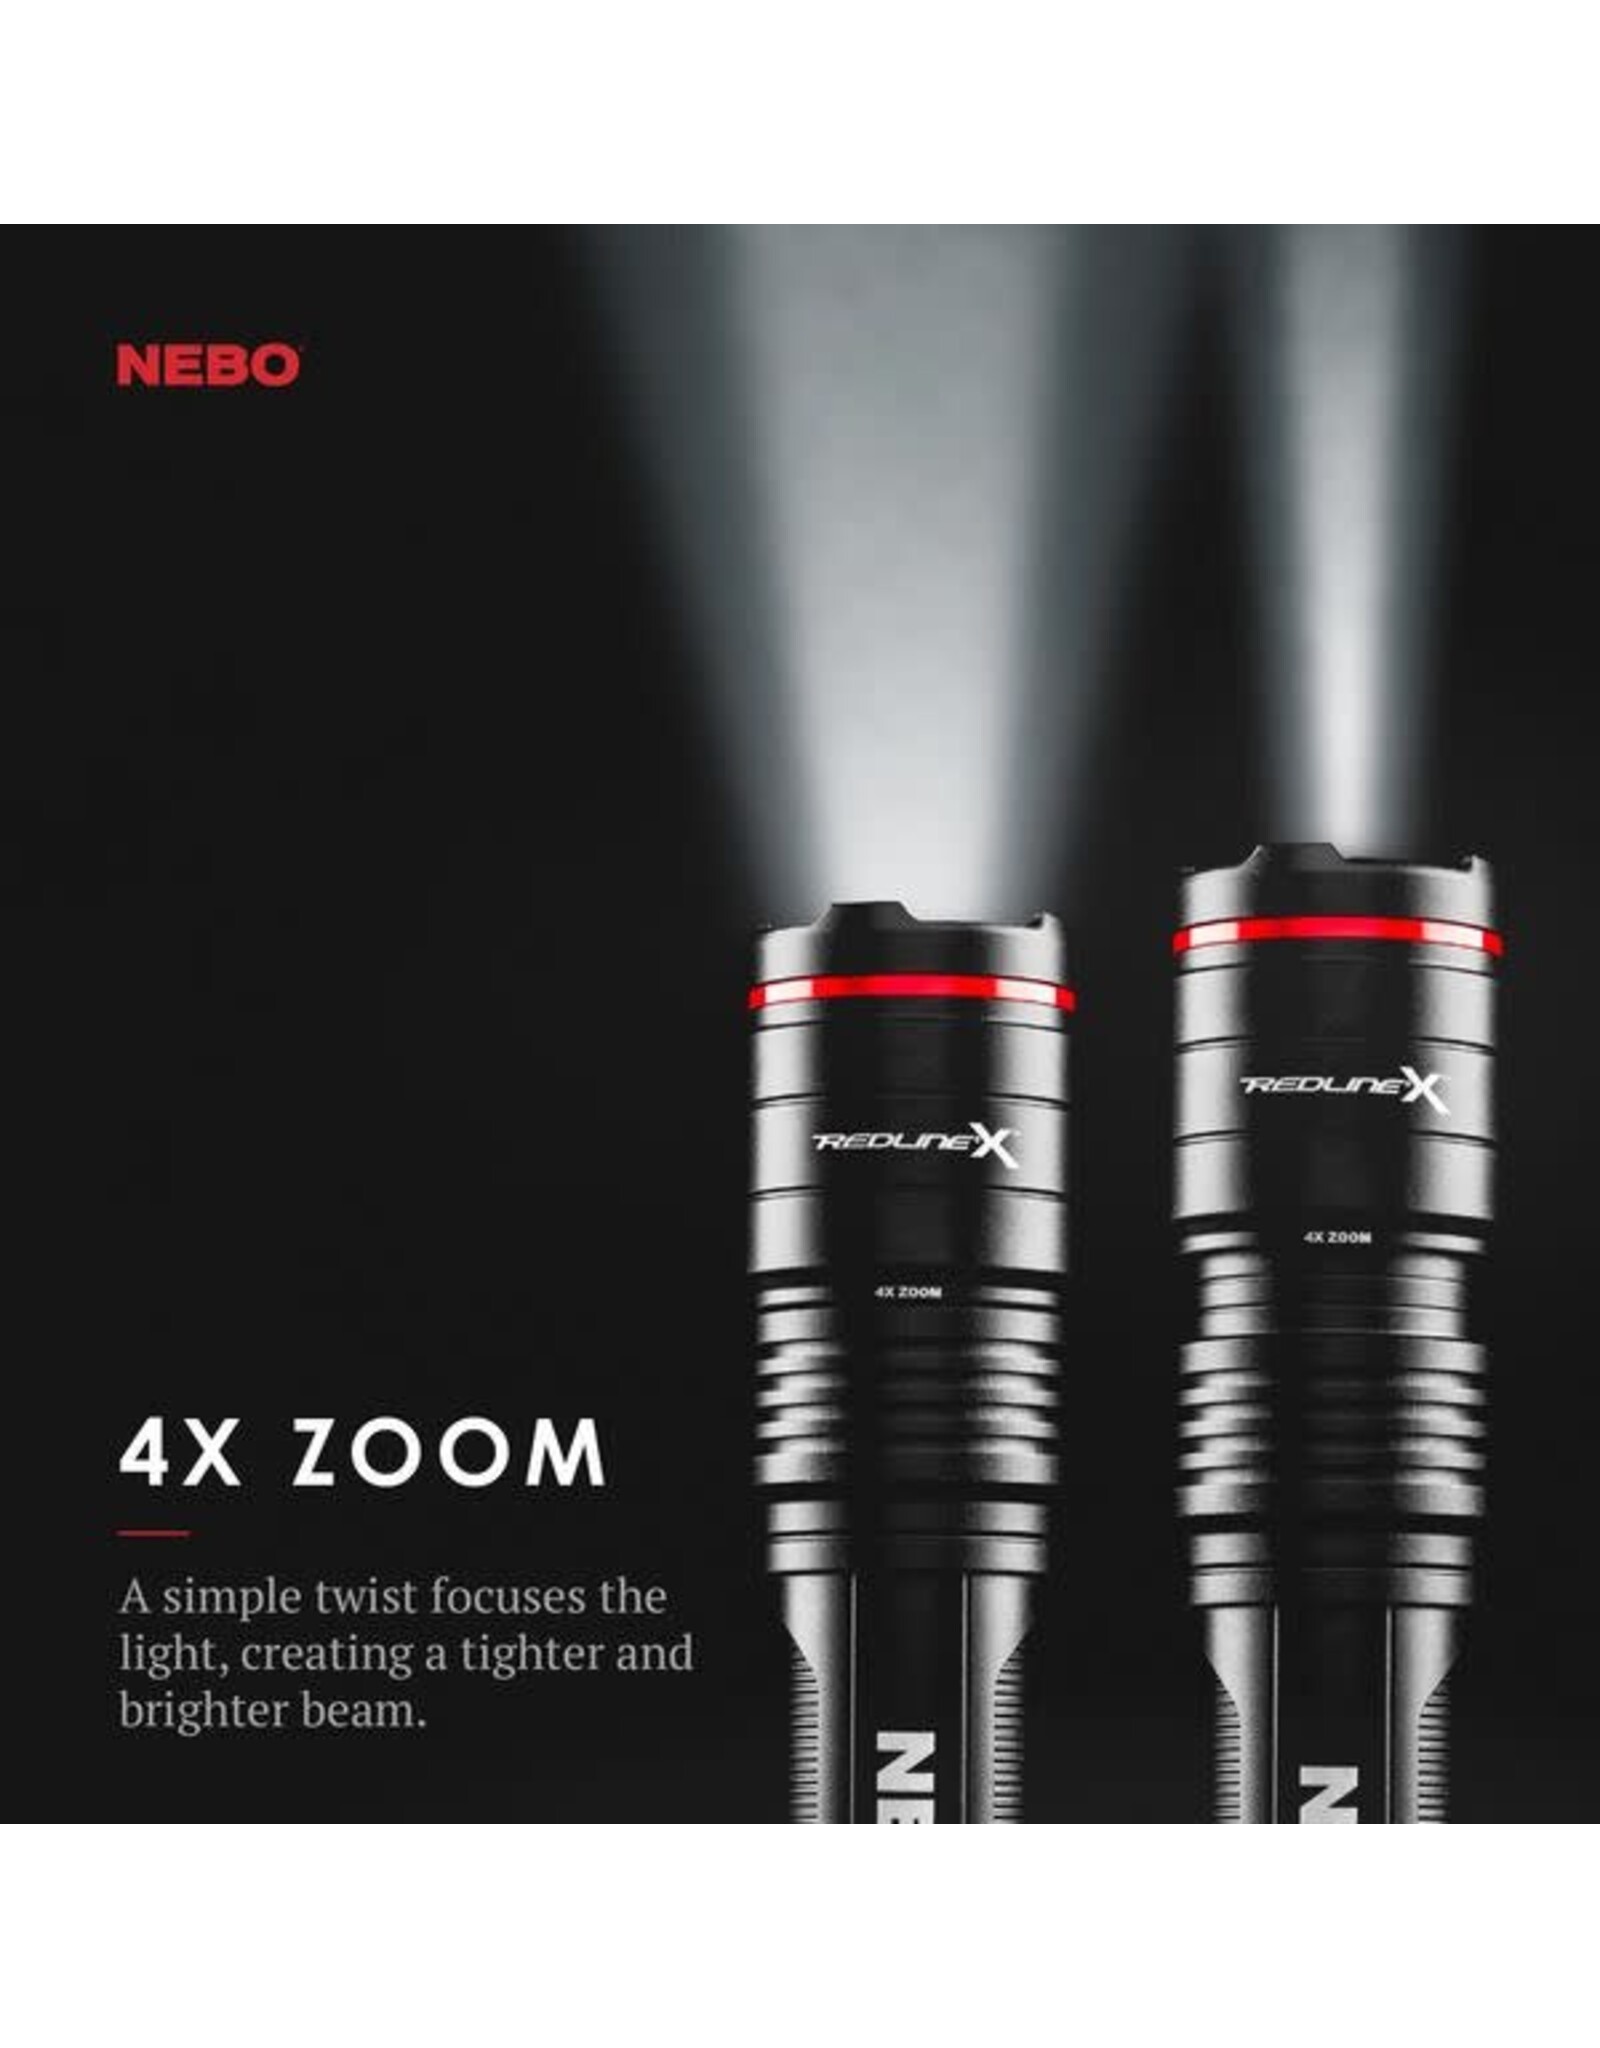 Nebo Nebo Redline X  Rechargeable 1800 Lumen Flashlight